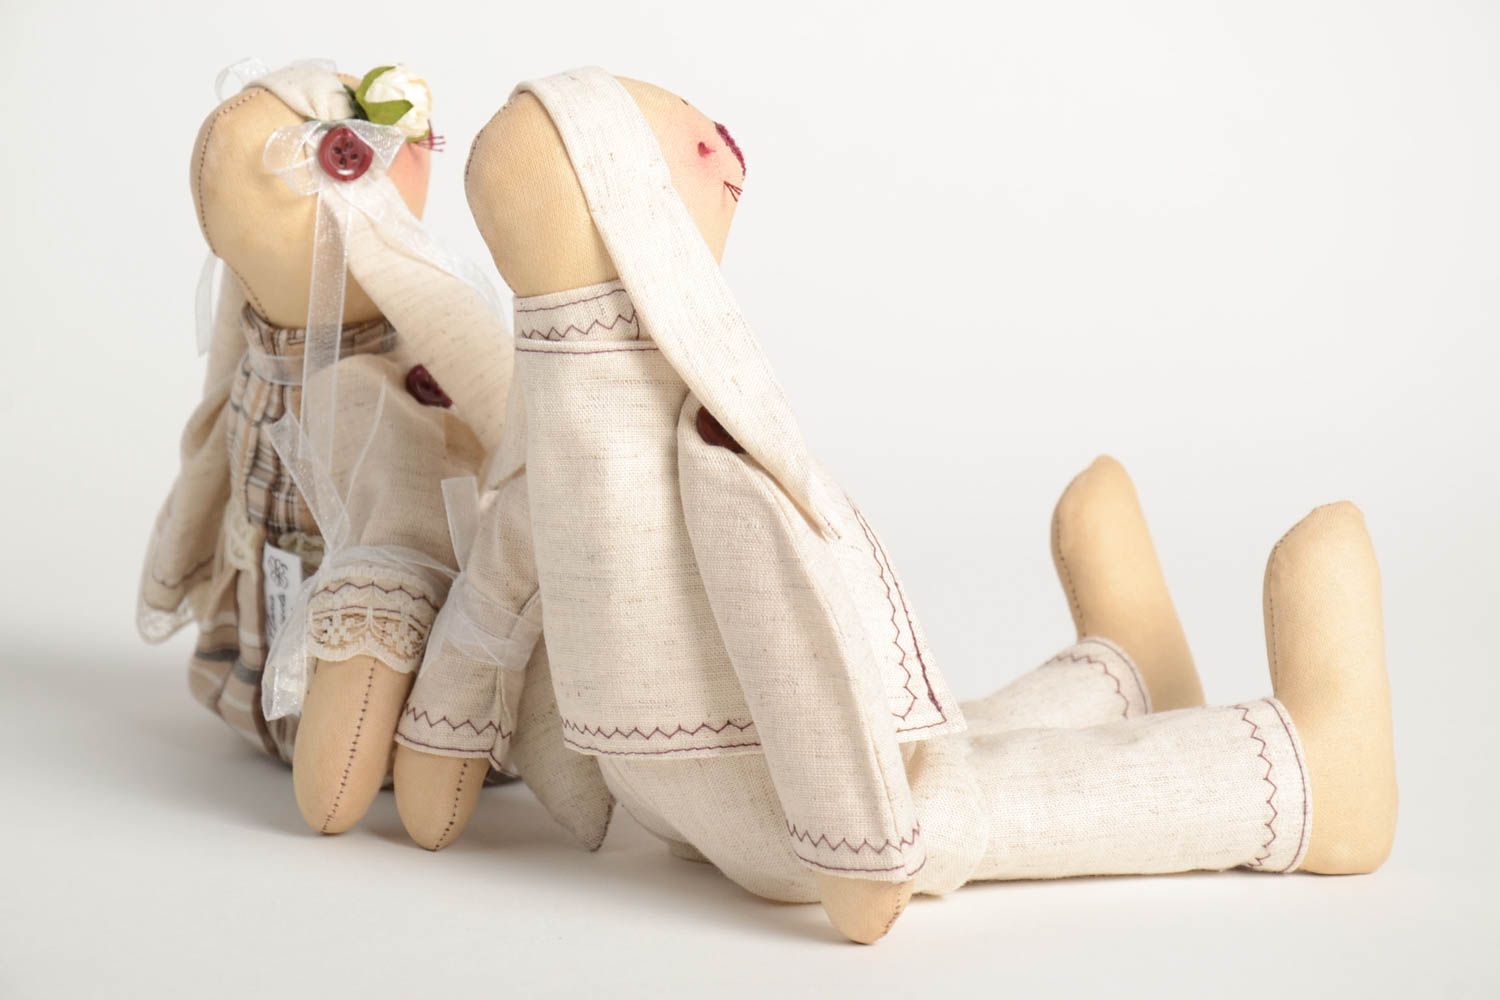 Handmade soft toys stuffed animals rabbit toys nursery decor wedding gift ideas photo 4